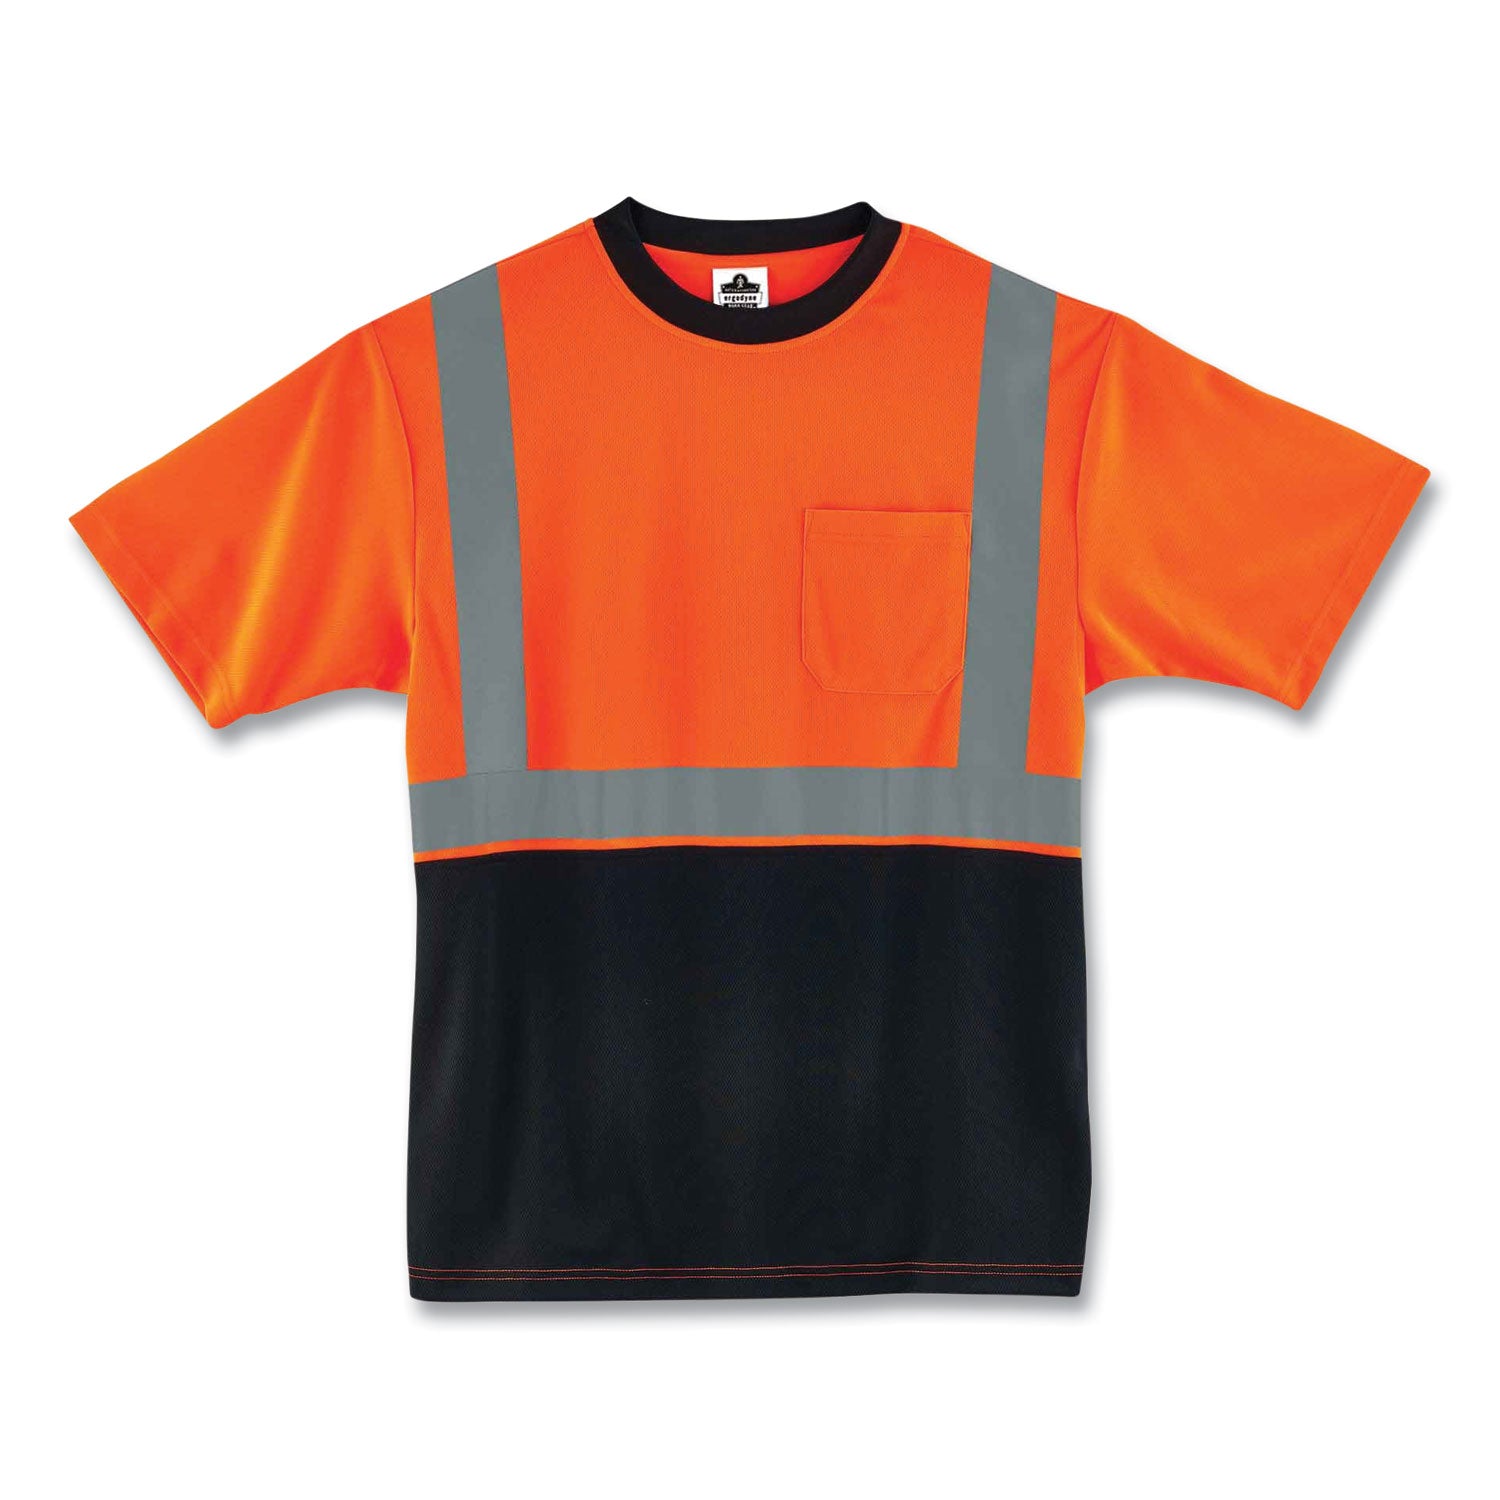 glowear-8289bk-class-2-hi-vis-t-shirt-with-black-bottom-small-orange-ships-in-1-3-business-days_ego22512 - 1